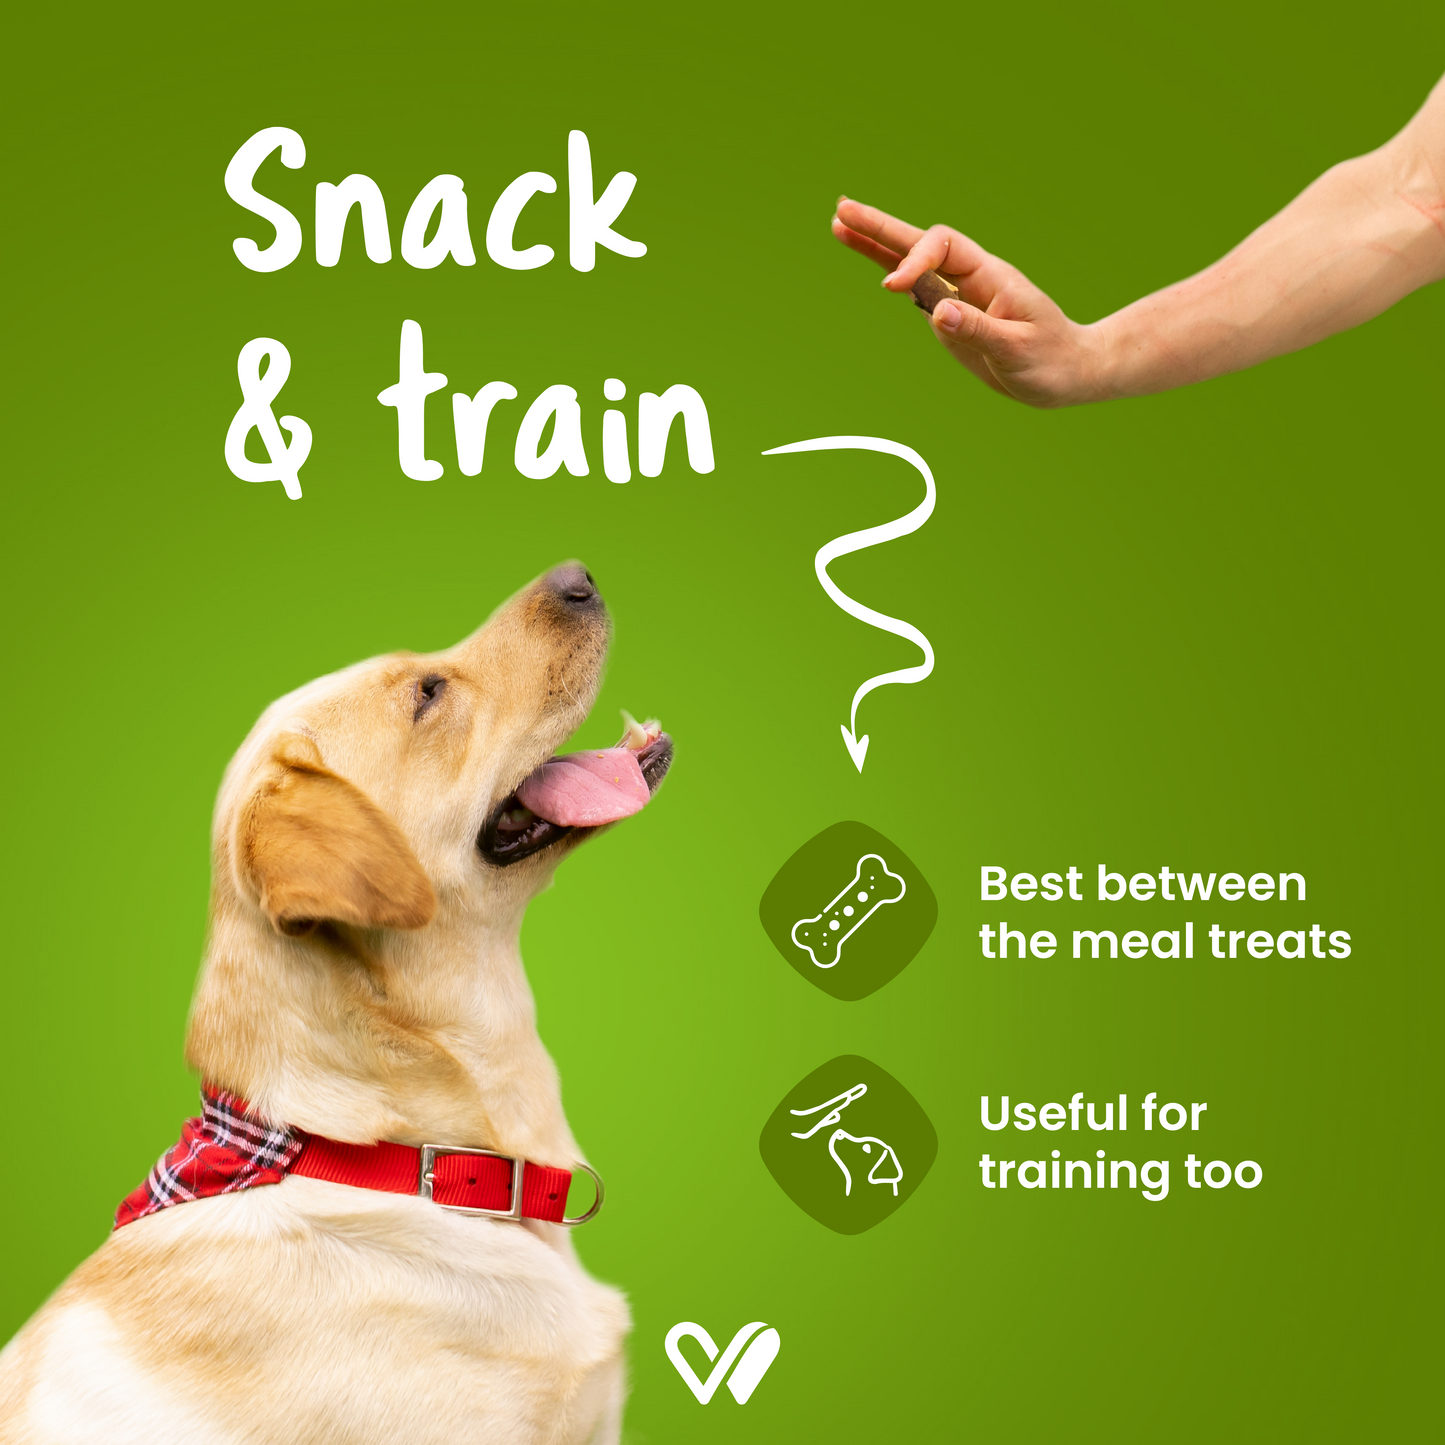 Barkstix Dog Treats for Training Adult & Puppies, 100g (Chicken & Banana)